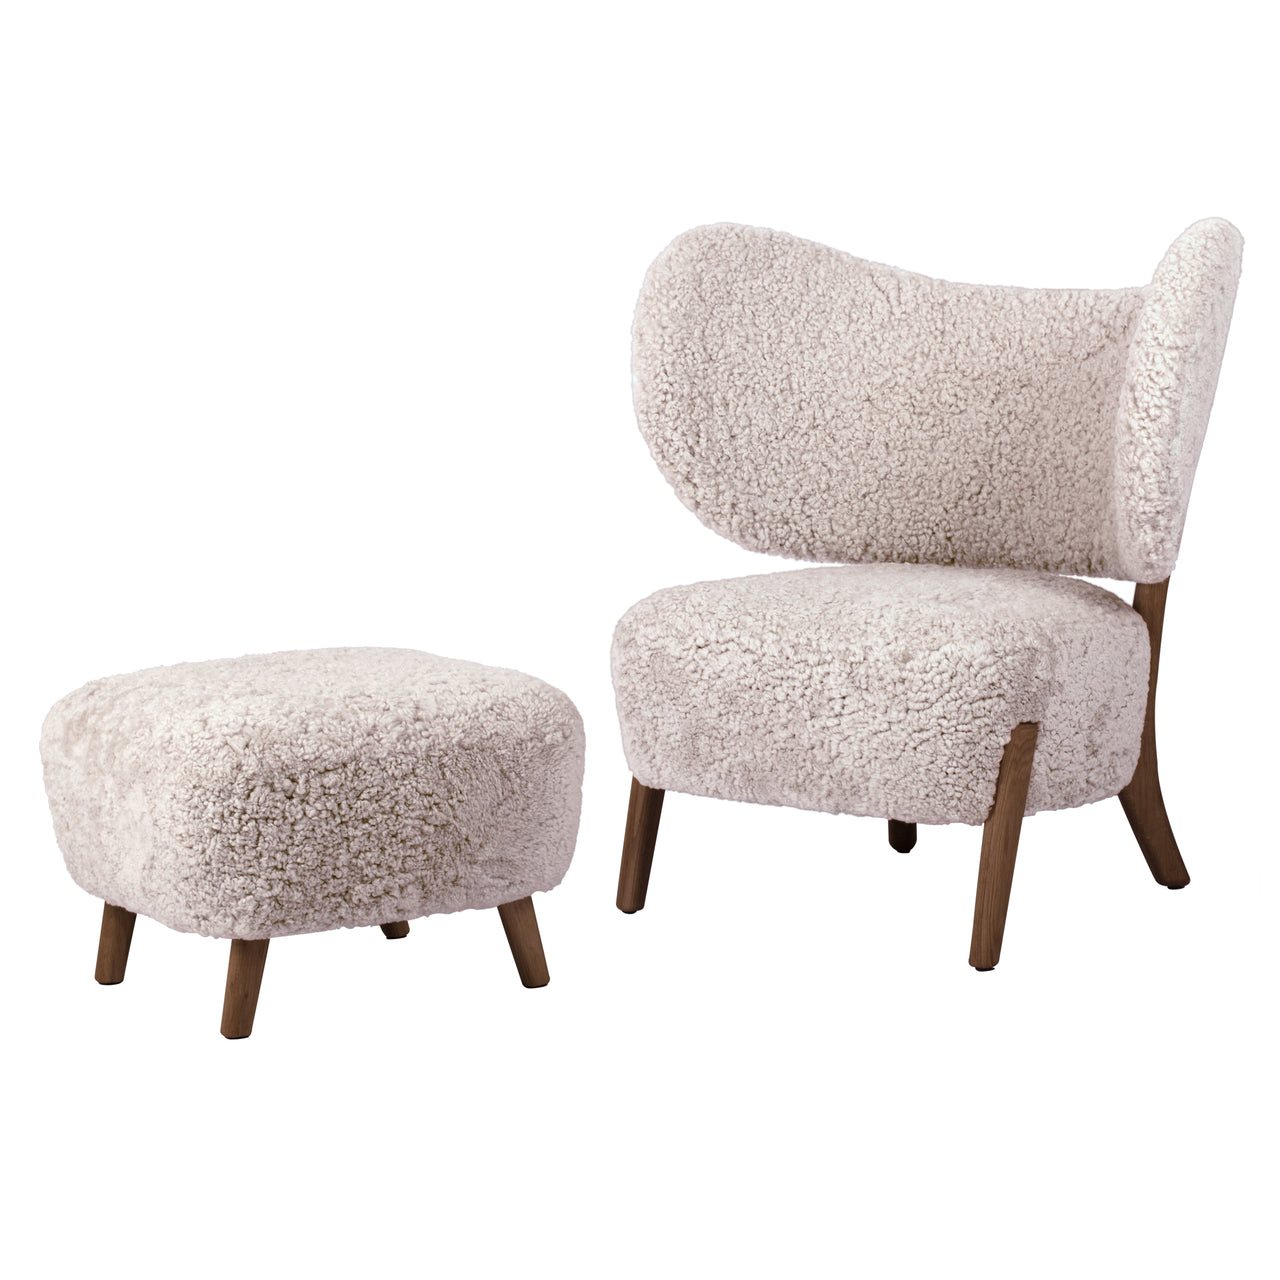 Tmbo Lounge Chair with Pouf: Walnut + Sheepskin Moonlight